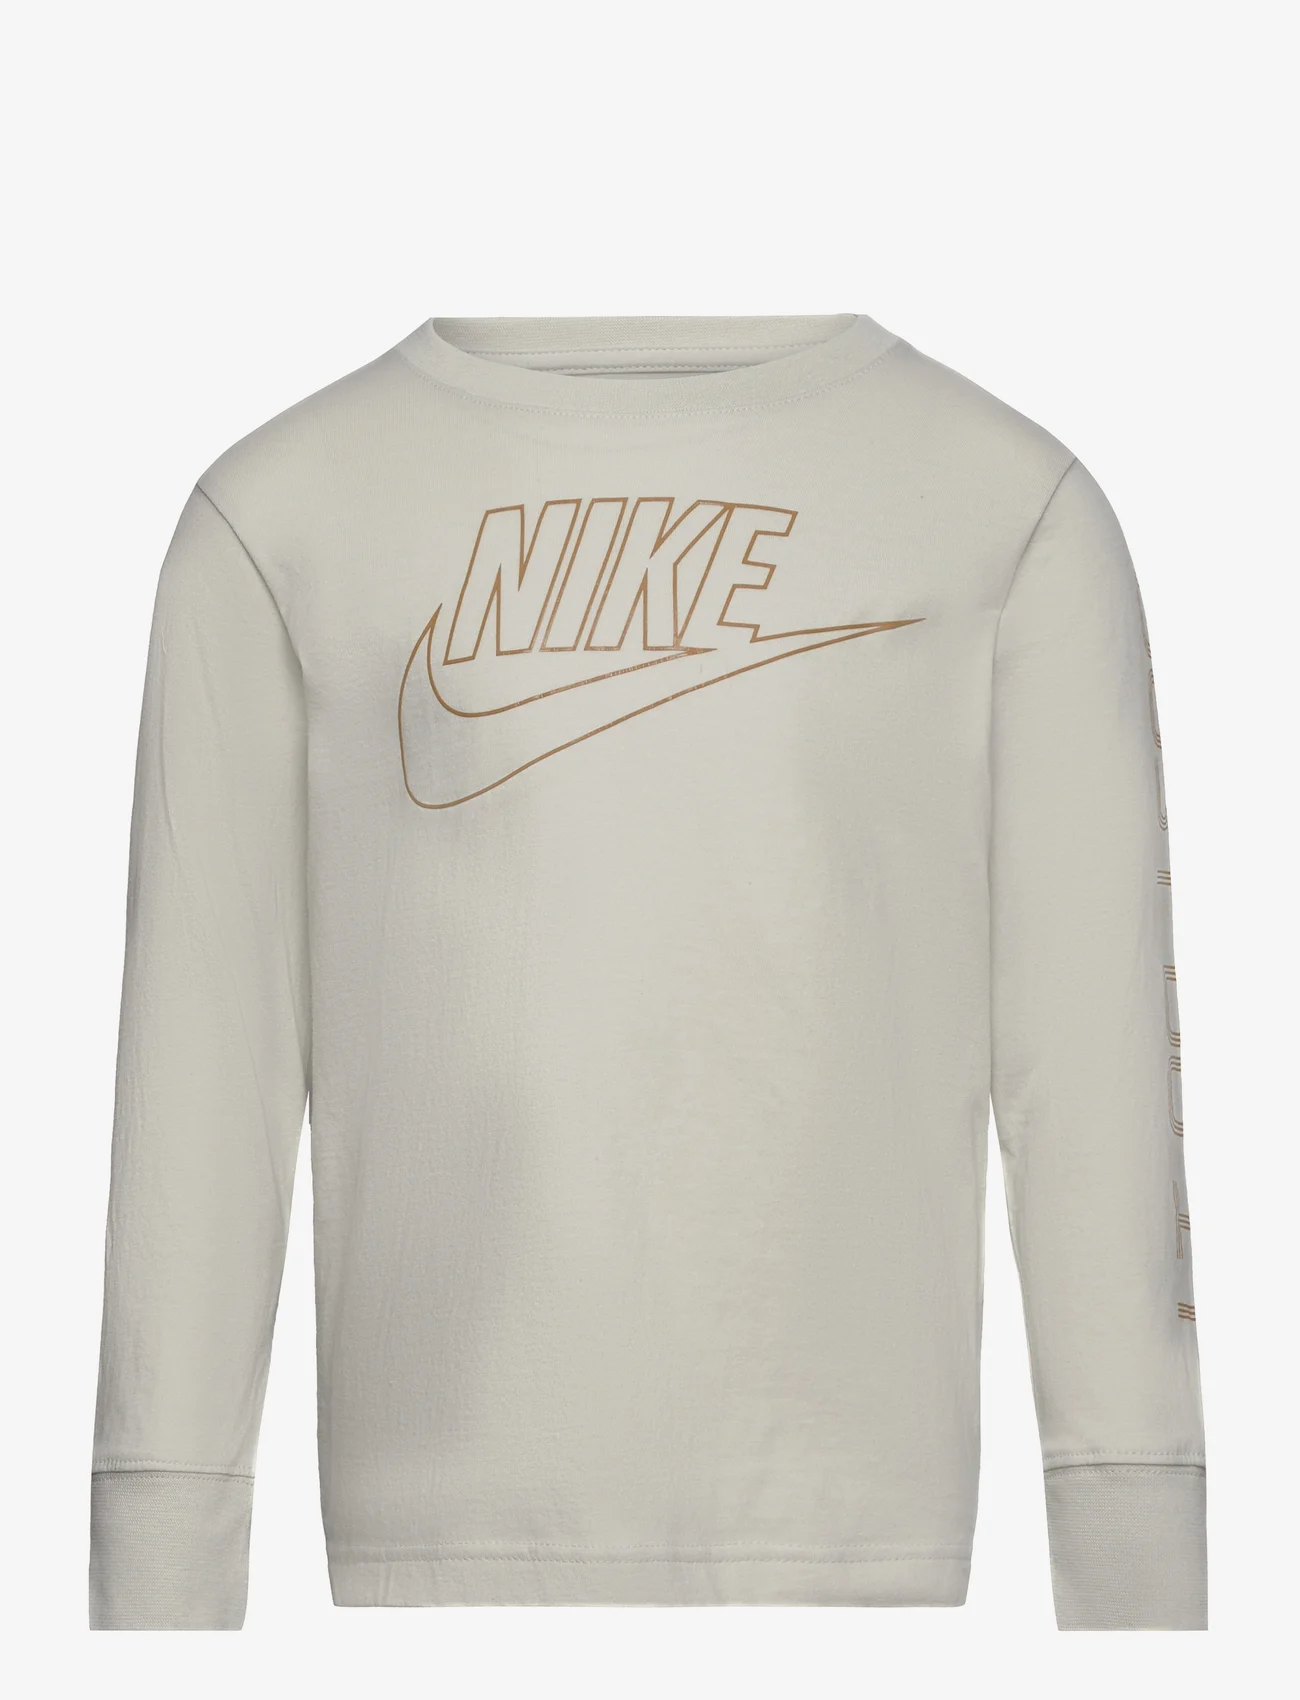 Nike - AMPLFIED LS SLEEVE HIT TEE - long-sleeved t-shirts - lt bone - 0